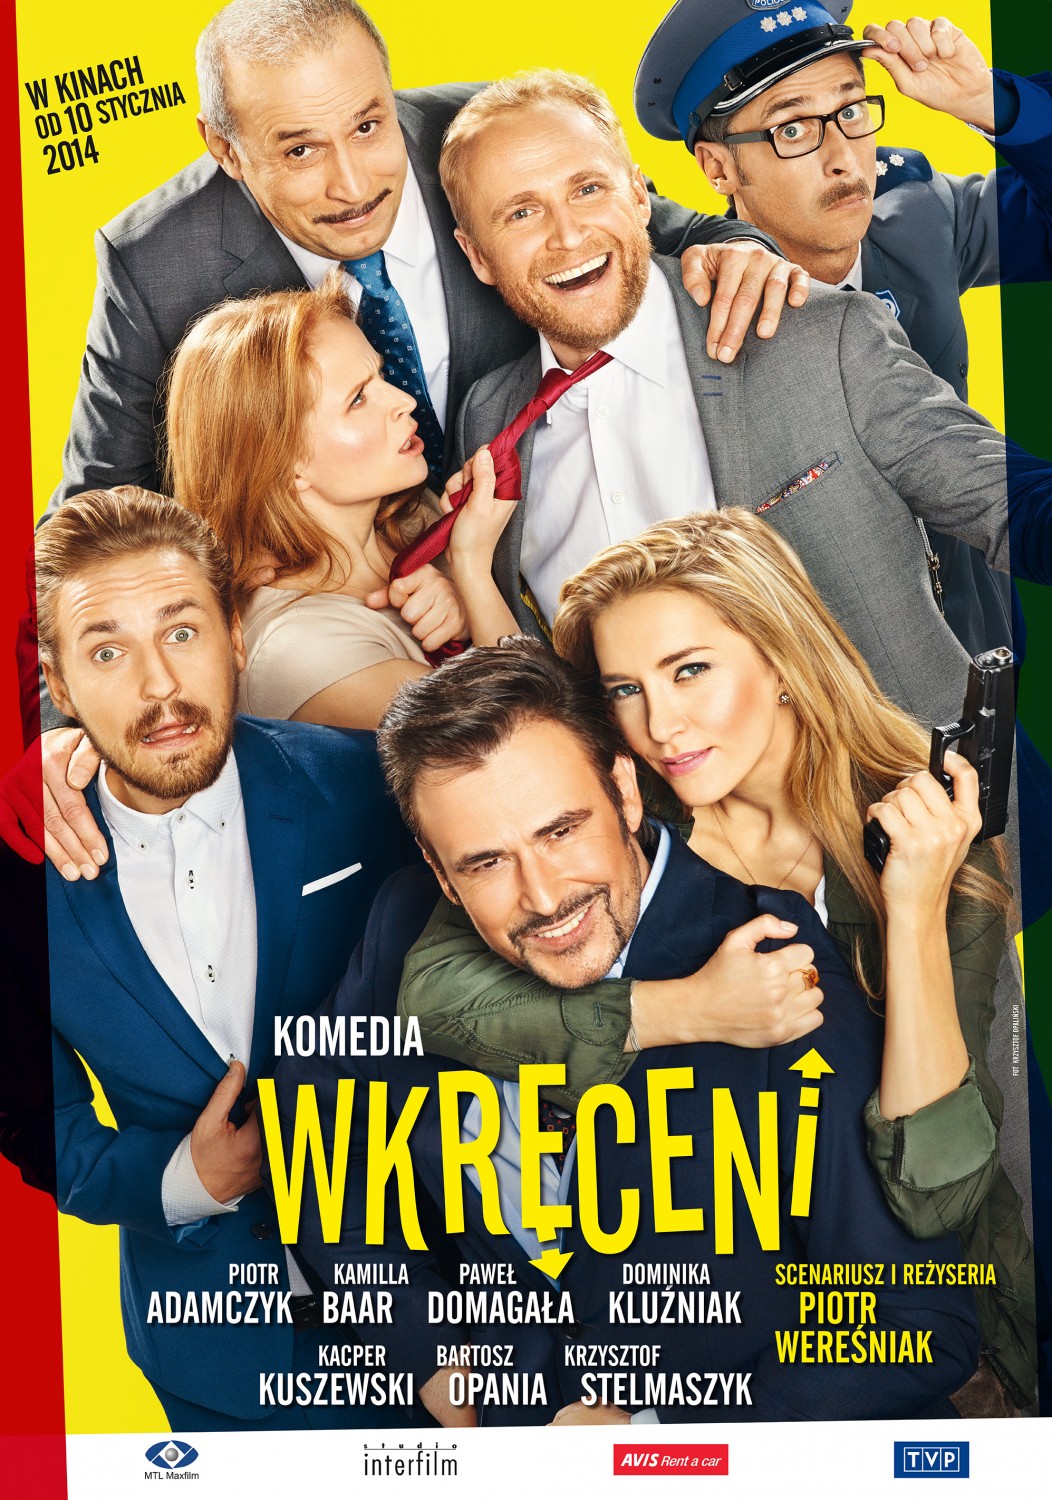 Extra Large Movie Poster Image for Wkreceni 